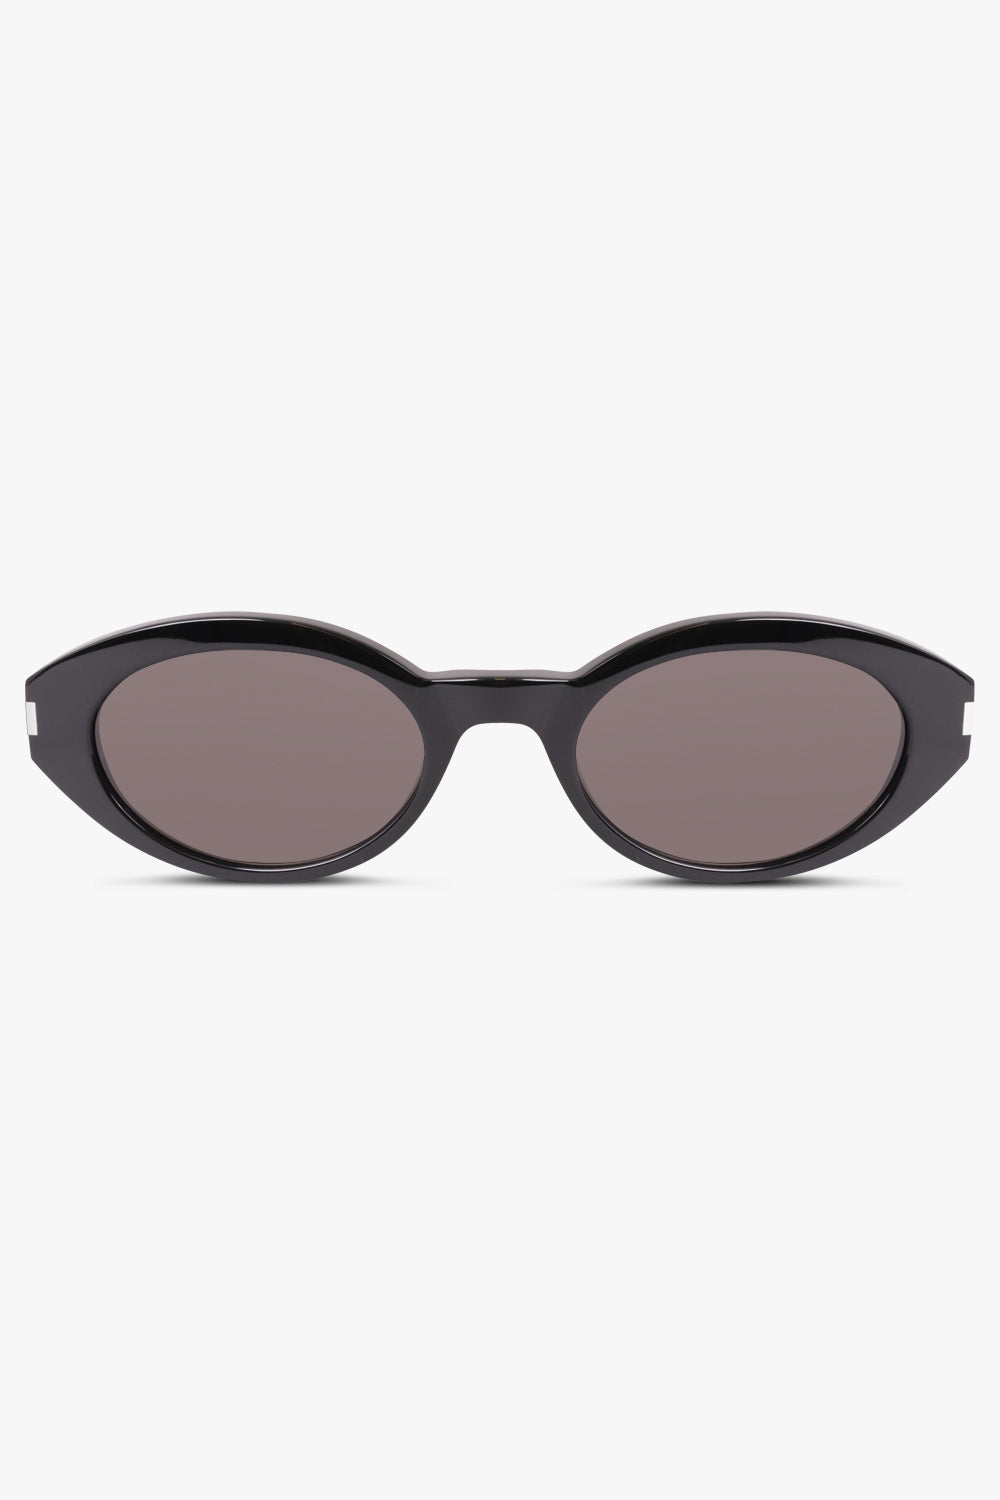 SAINT LAURENT ACCESSORIES BLACK / BLACK SL 567 Oval Frame Sunglasses | Black